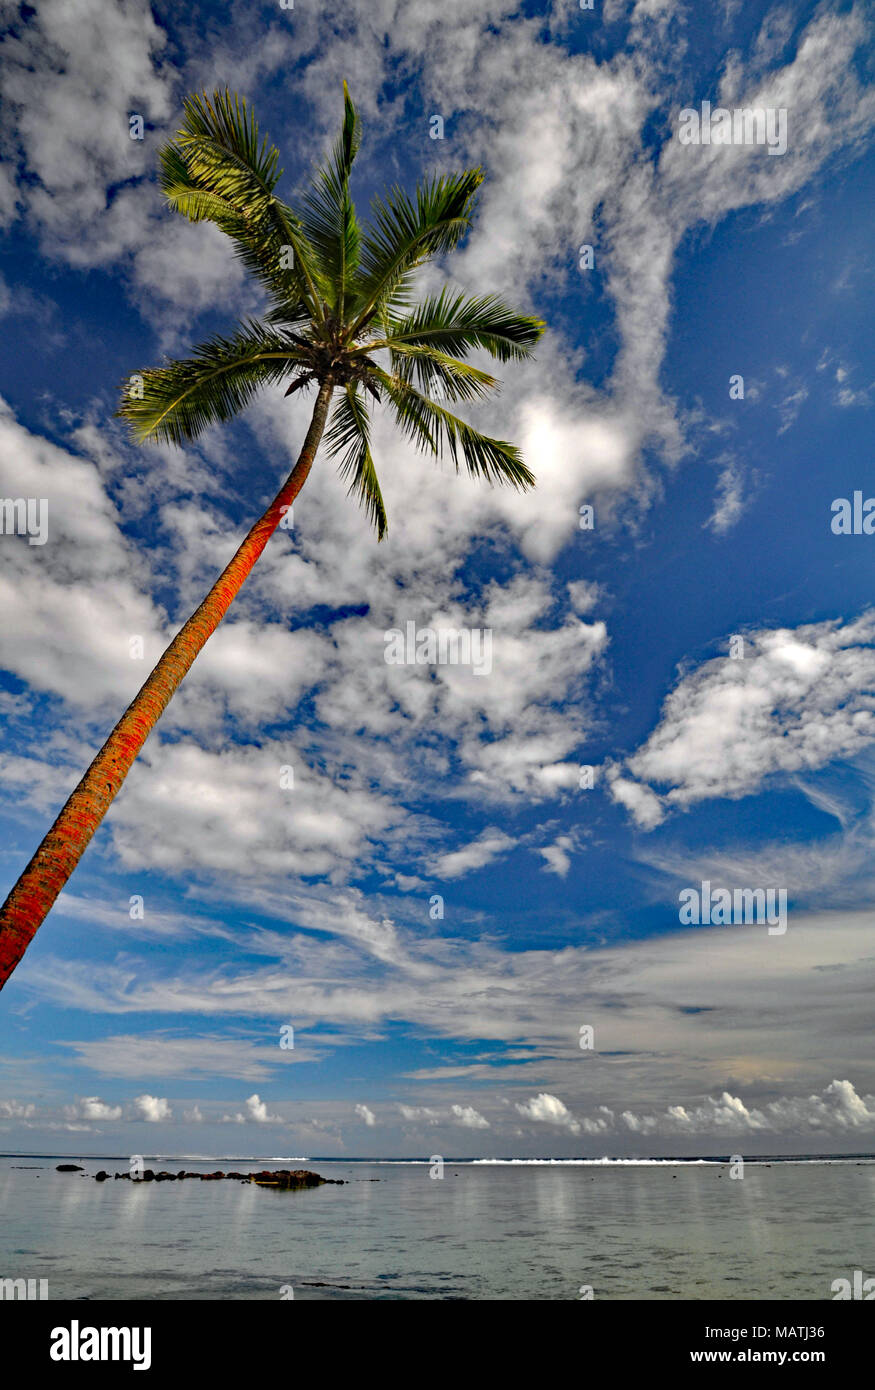 Fiji viti levu island sigatoka hi-res stock photography and images - Alamy